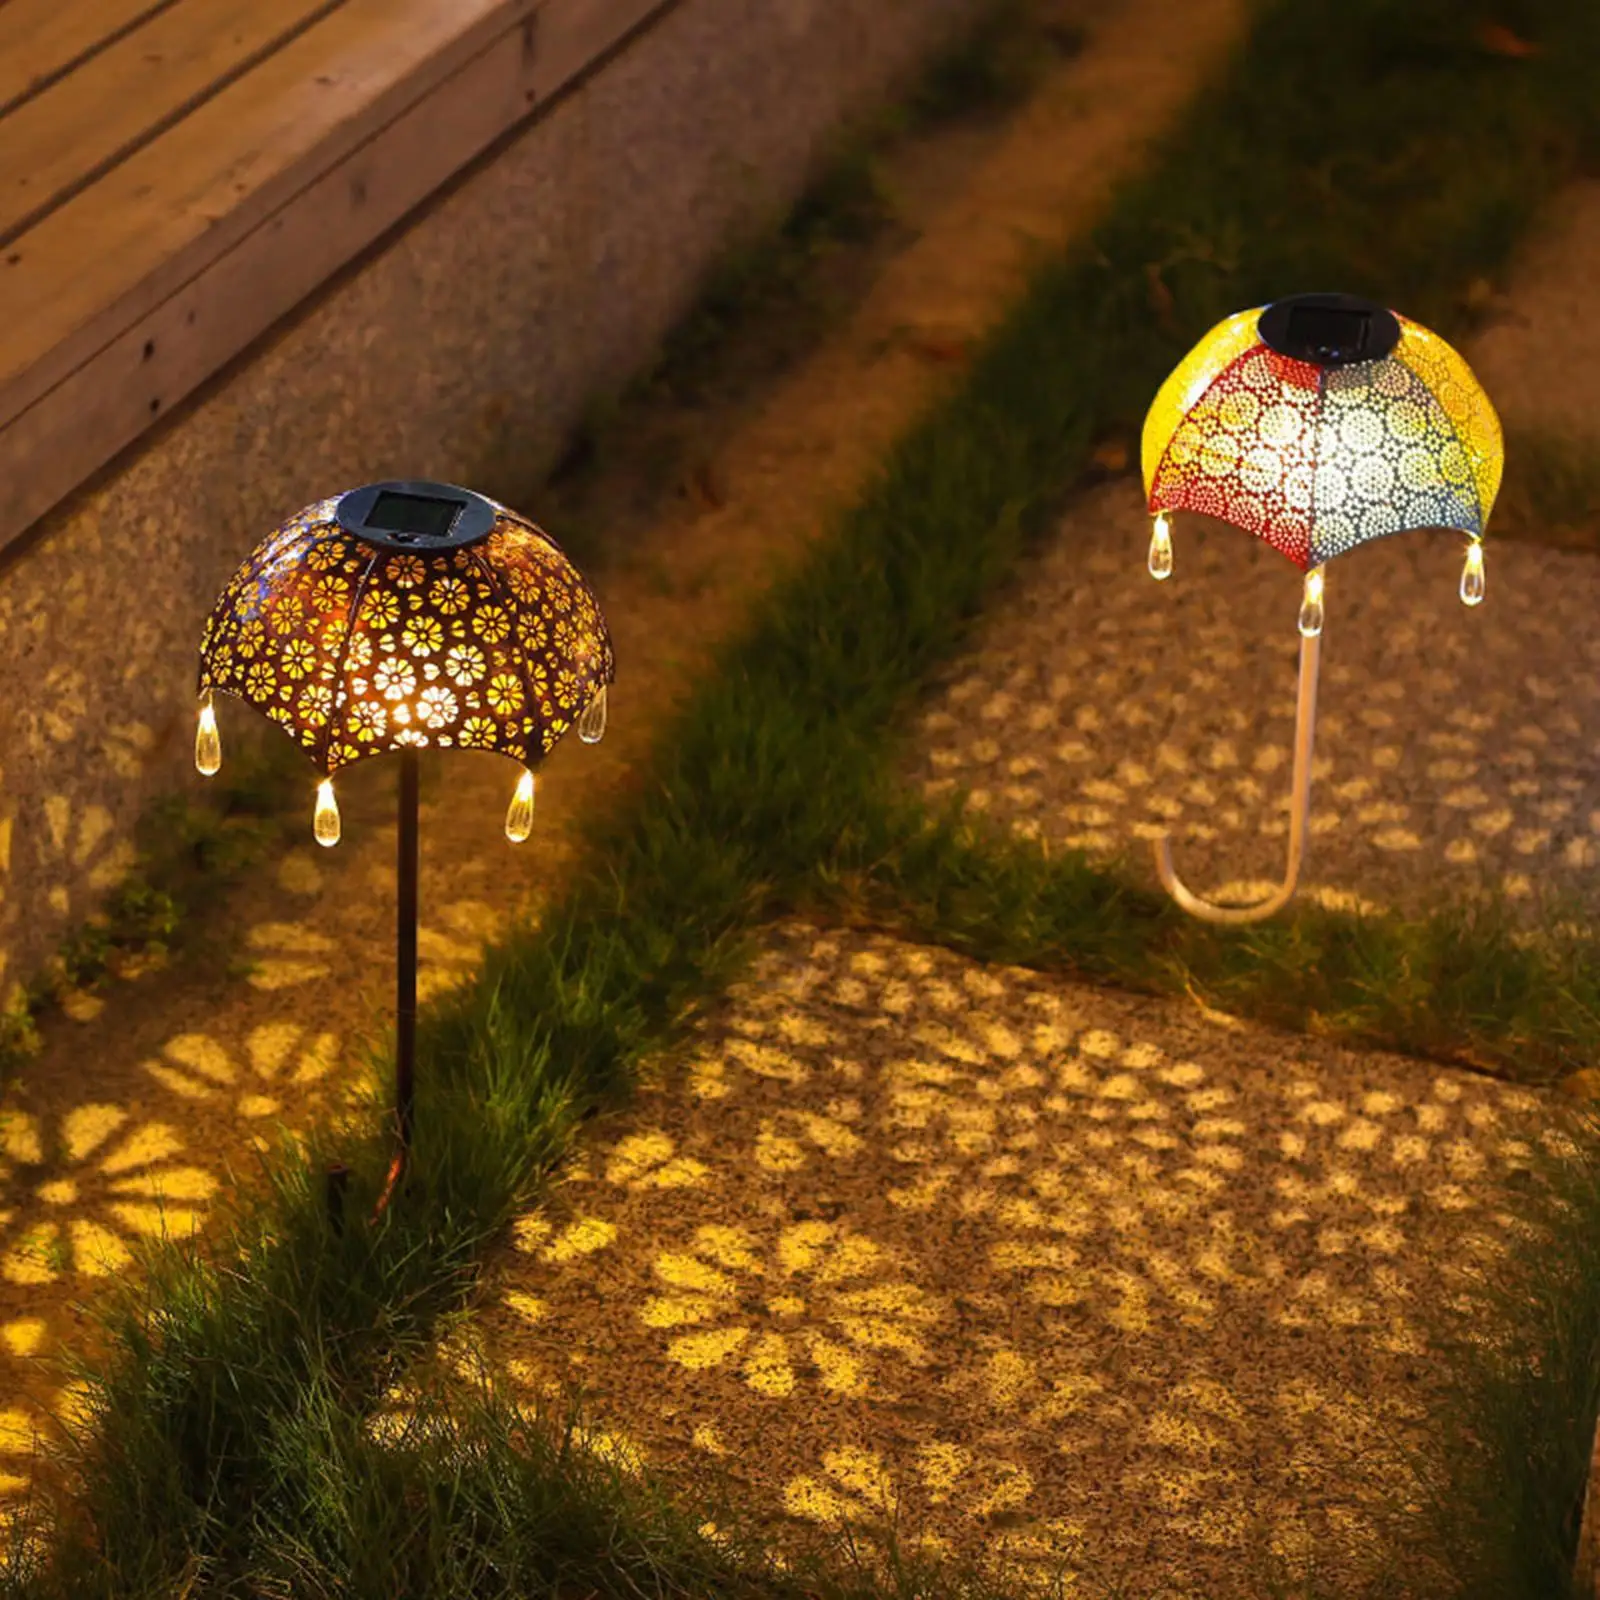 Umbrella Shaped Garden Lamp Landscape Lamp Stake Light for Courtyard Walkway